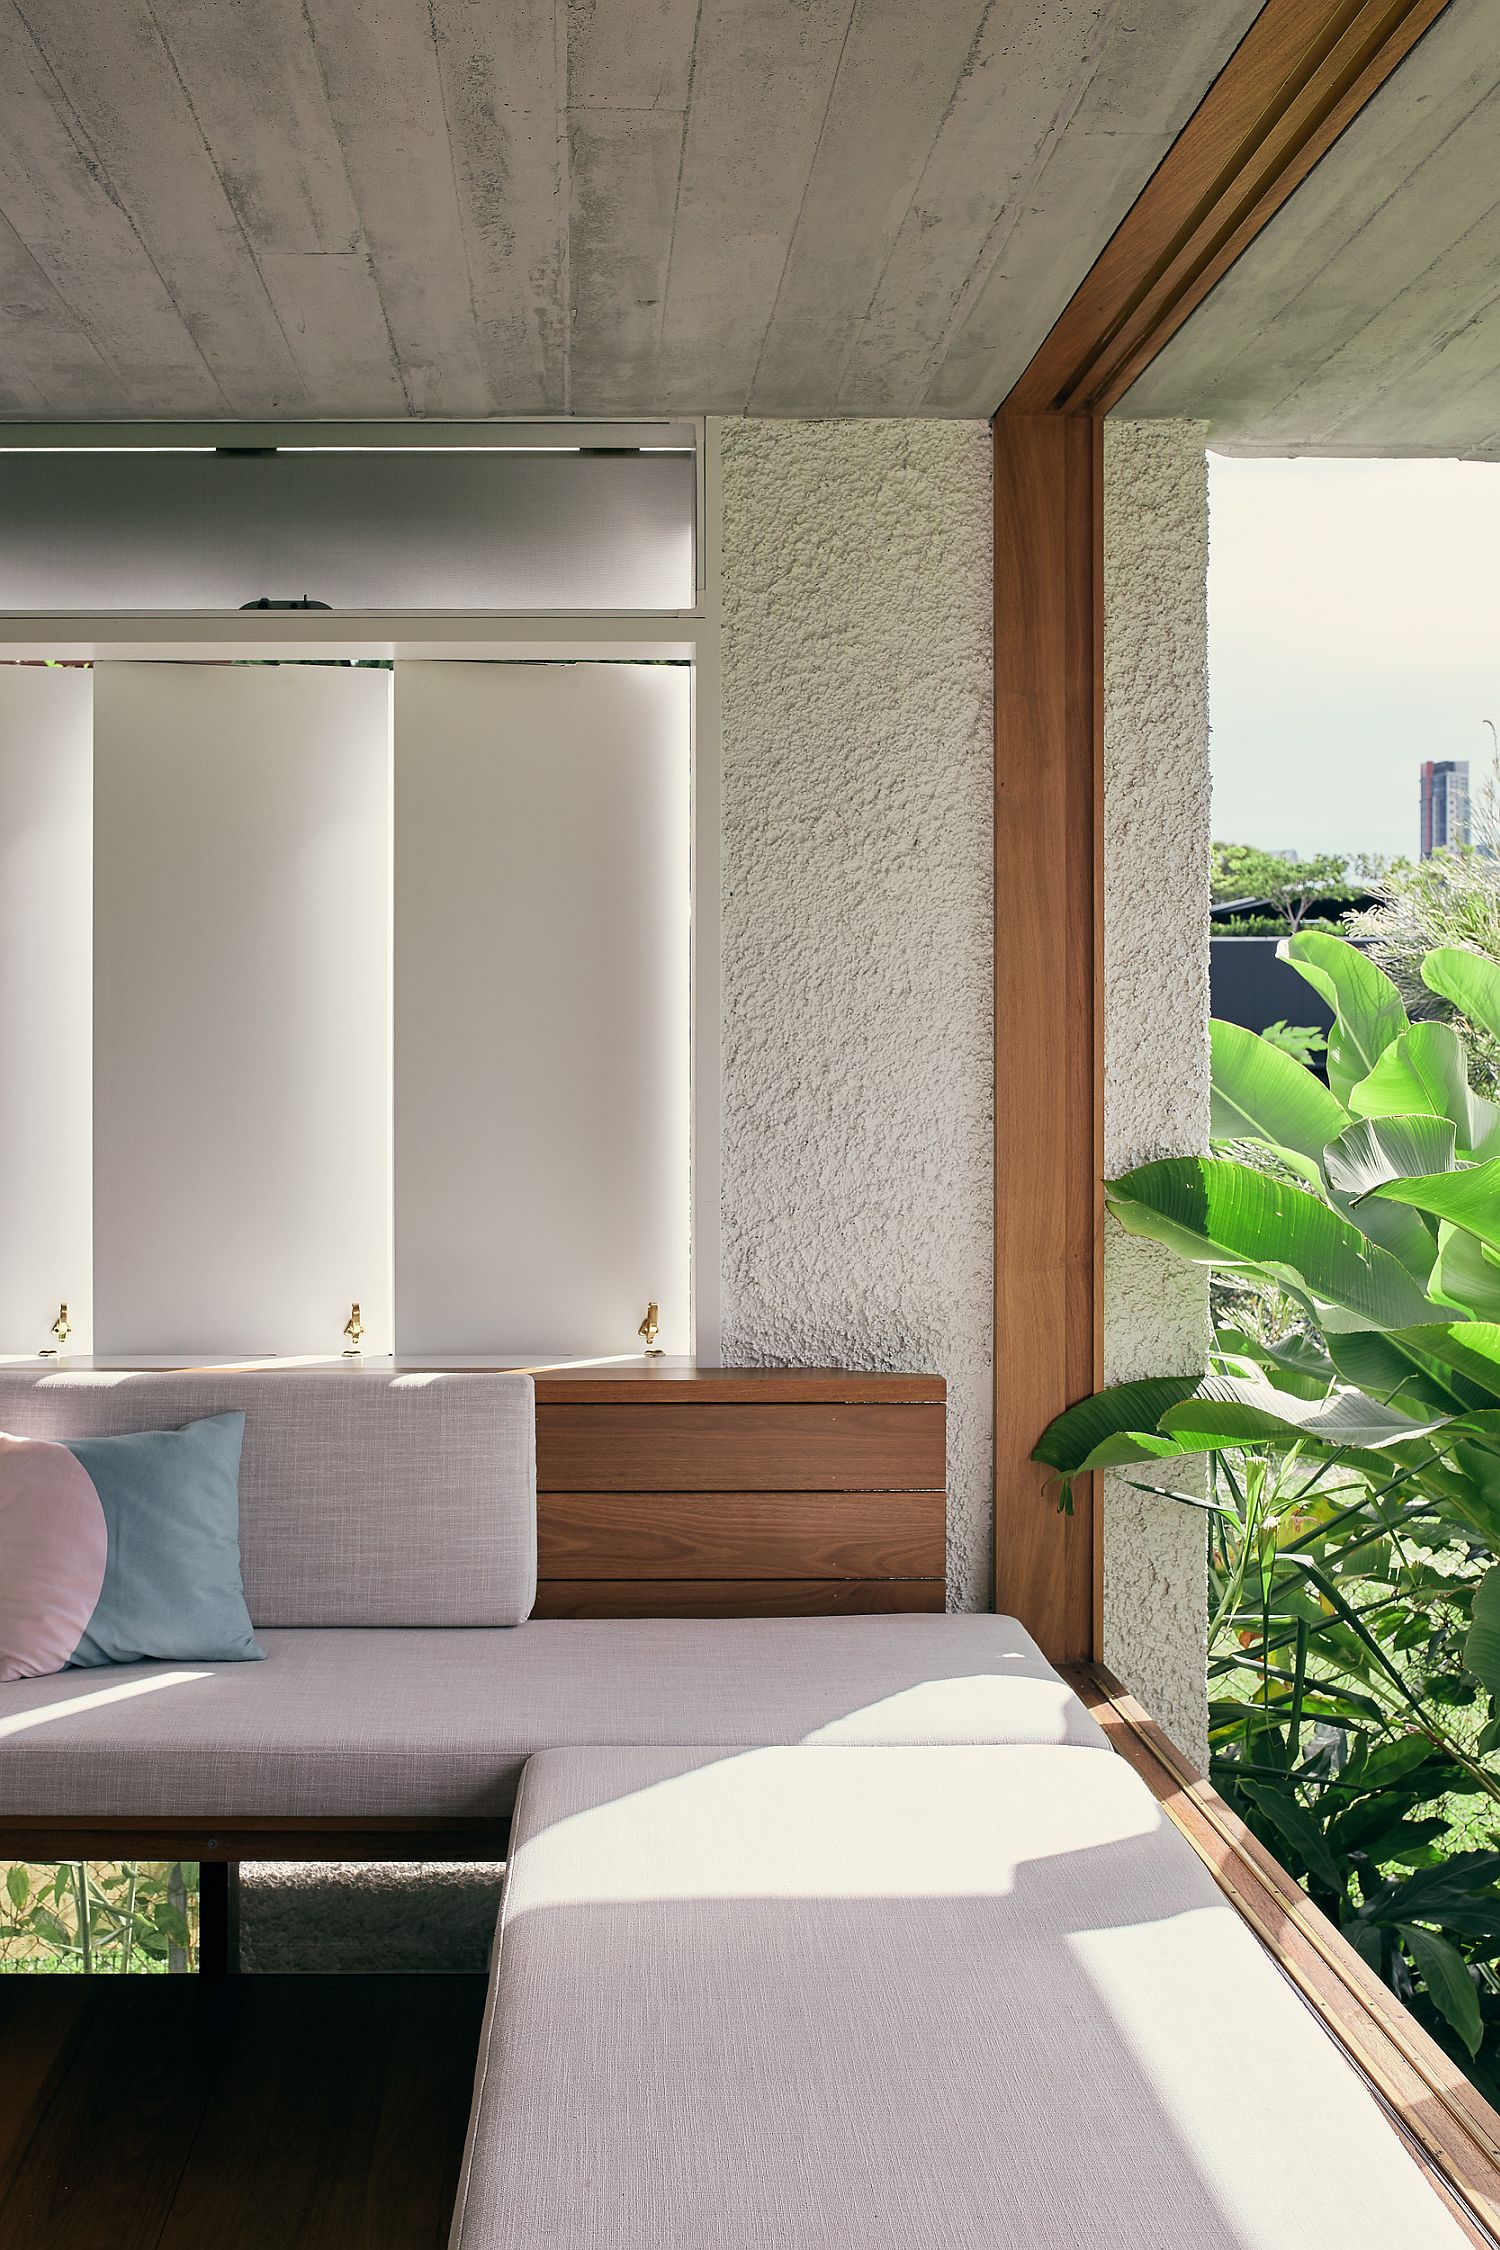 Fabulous-little-seat-next-to-the-open-window-overlooking-the-garden